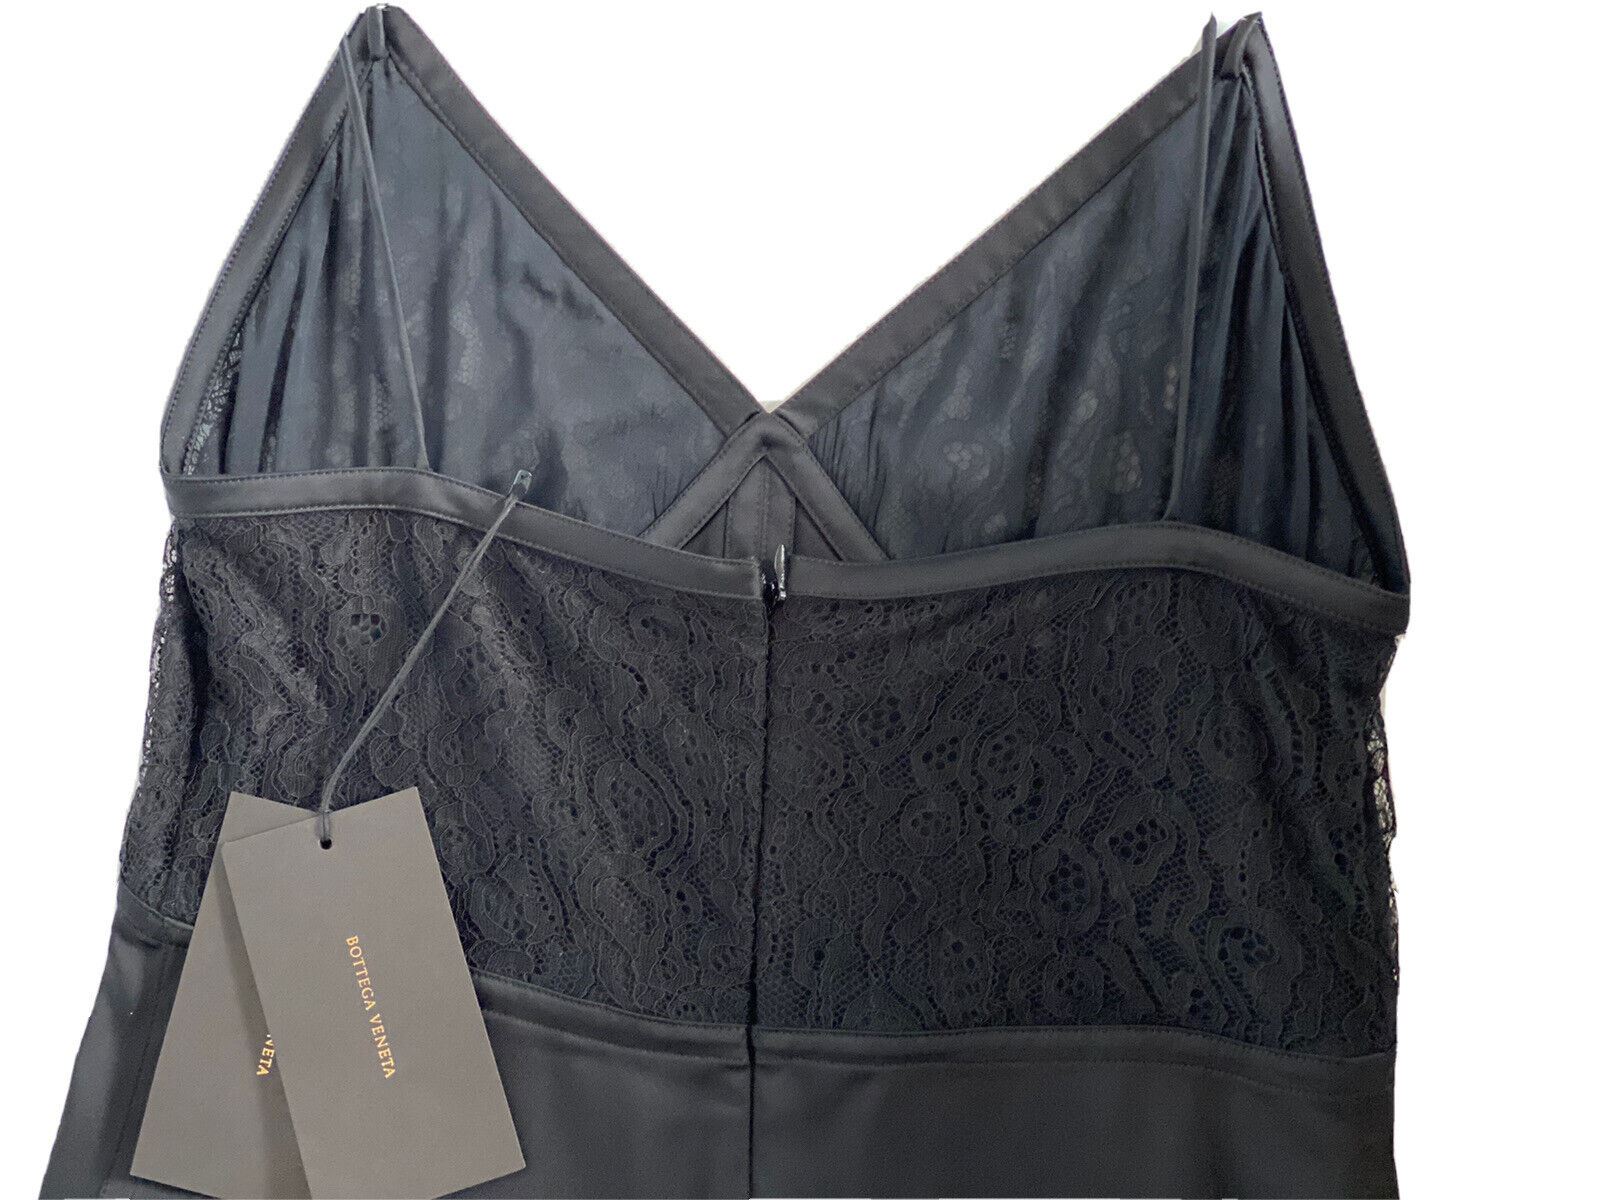 Neu mit Etikett: 2380 $ Bottega Veneta Schwarzes Schlafkleid für Damen 6 US (42 Bottega) 605980 IT